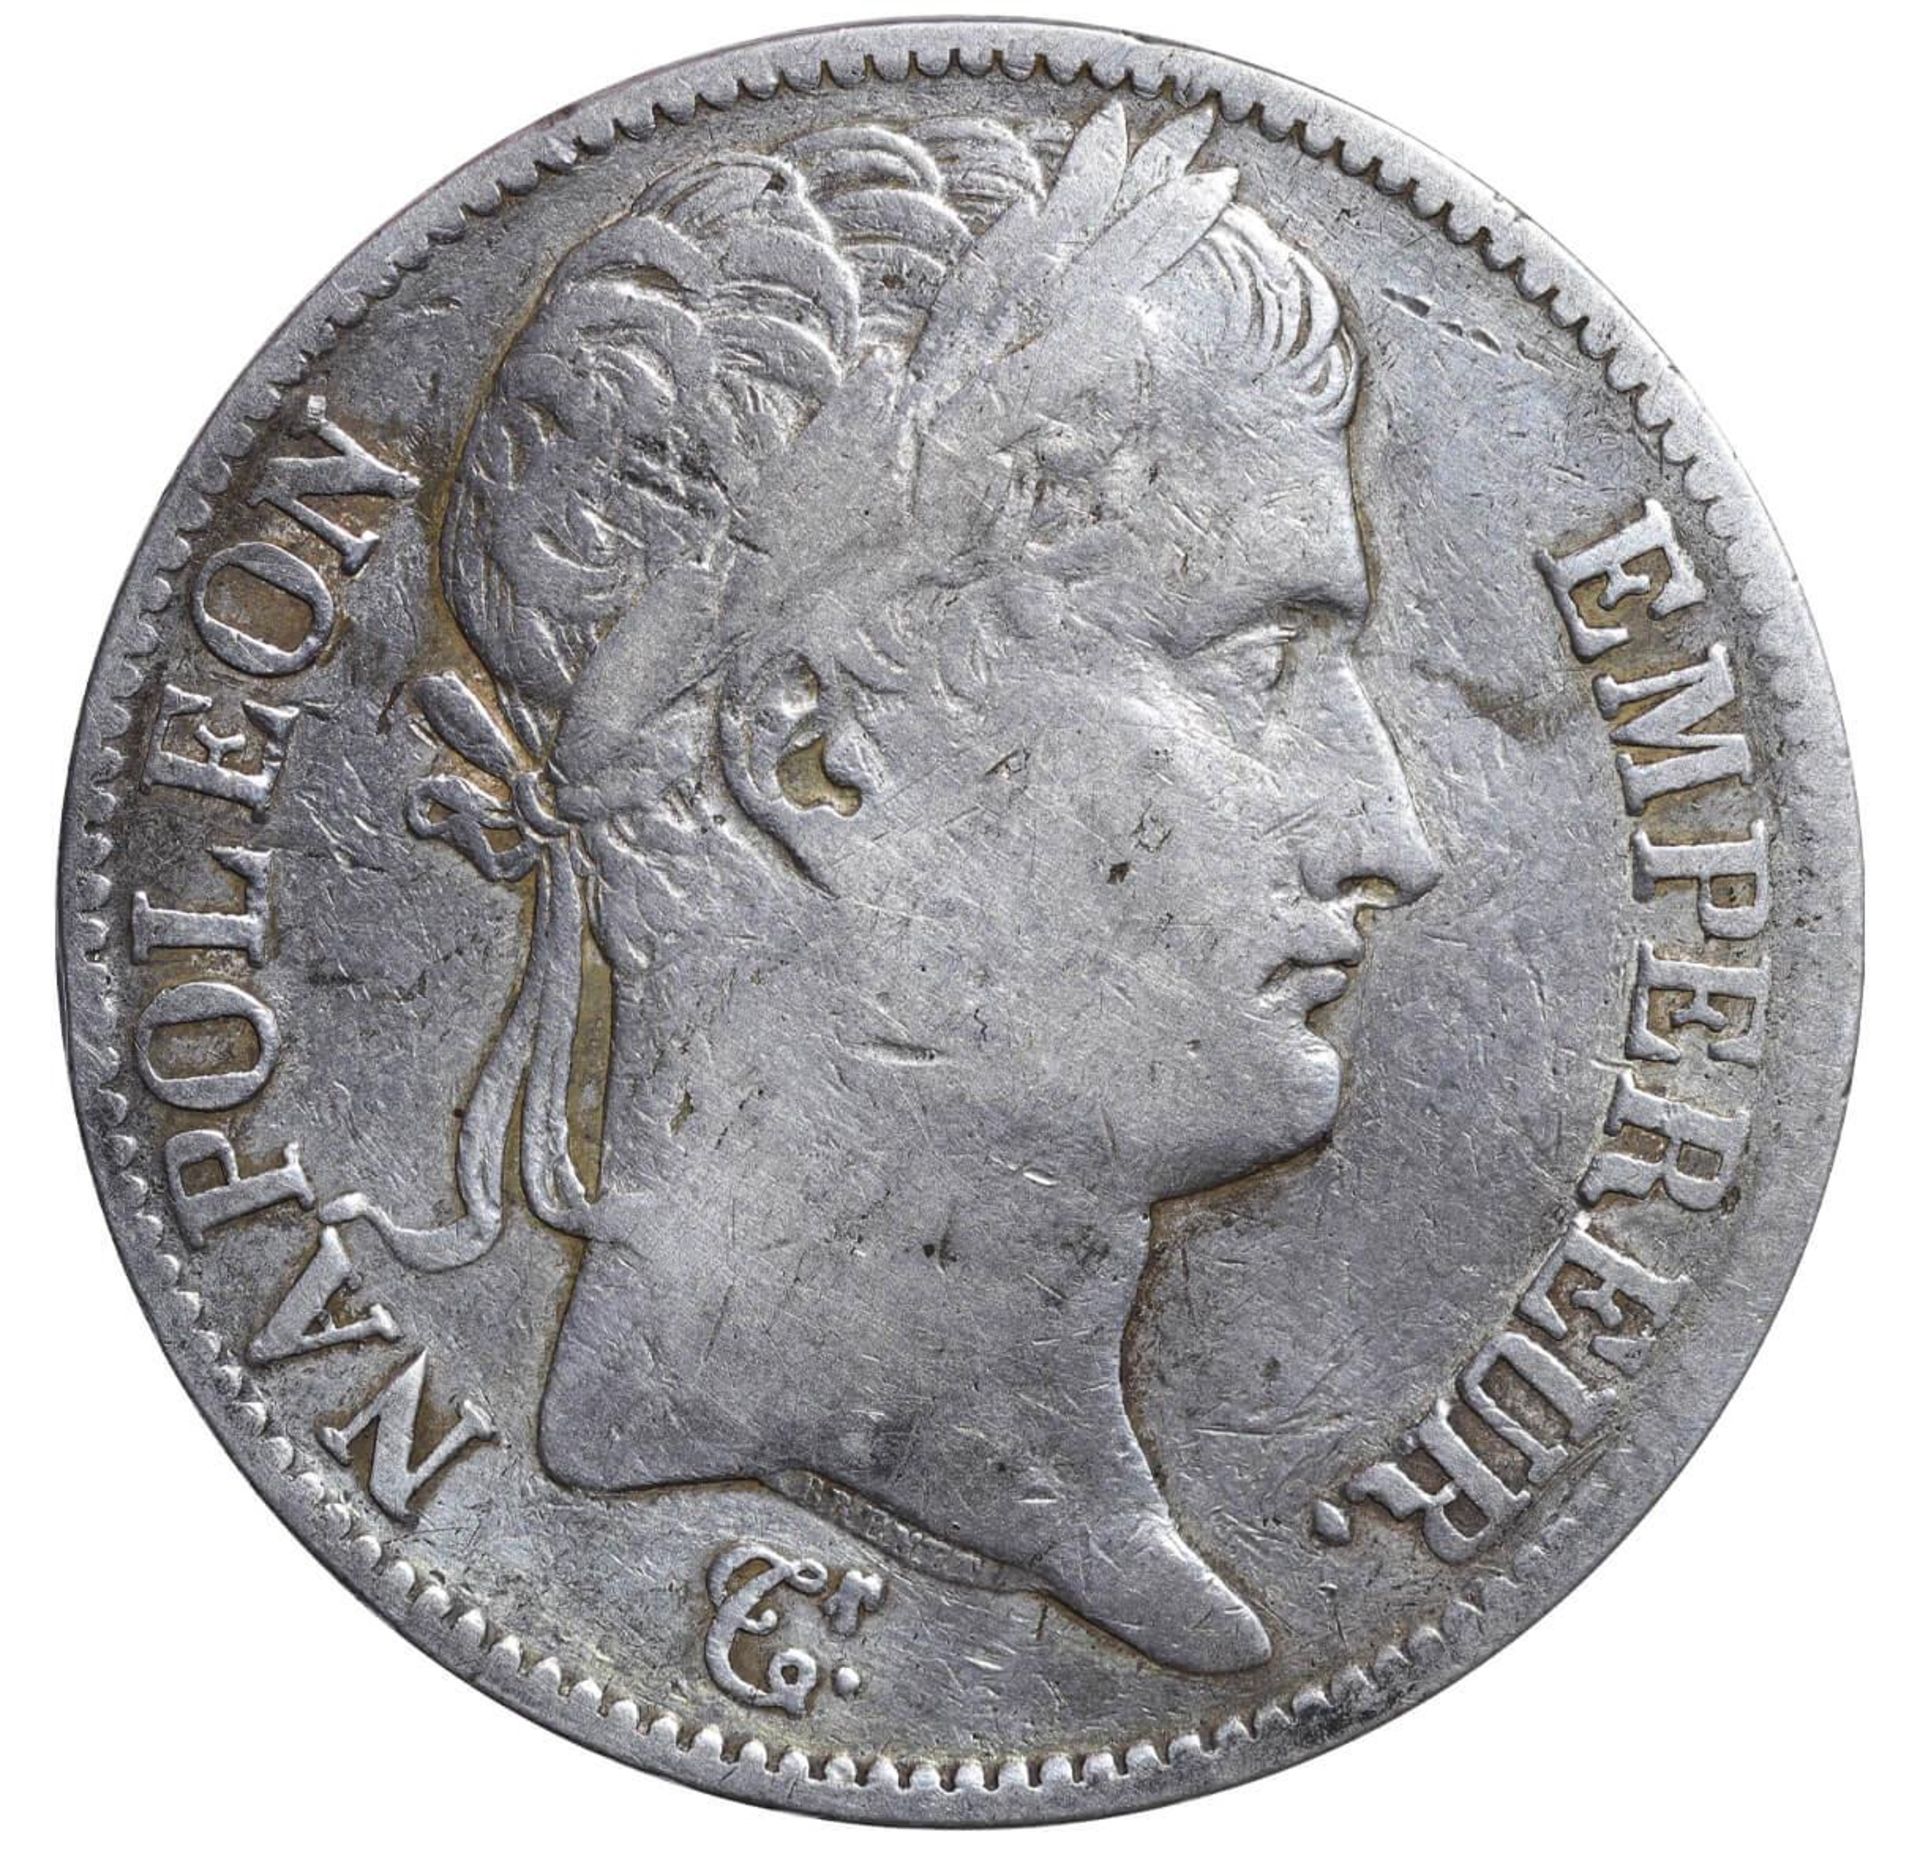 France, 5 Francs, 1813 year - Image 2 of 3